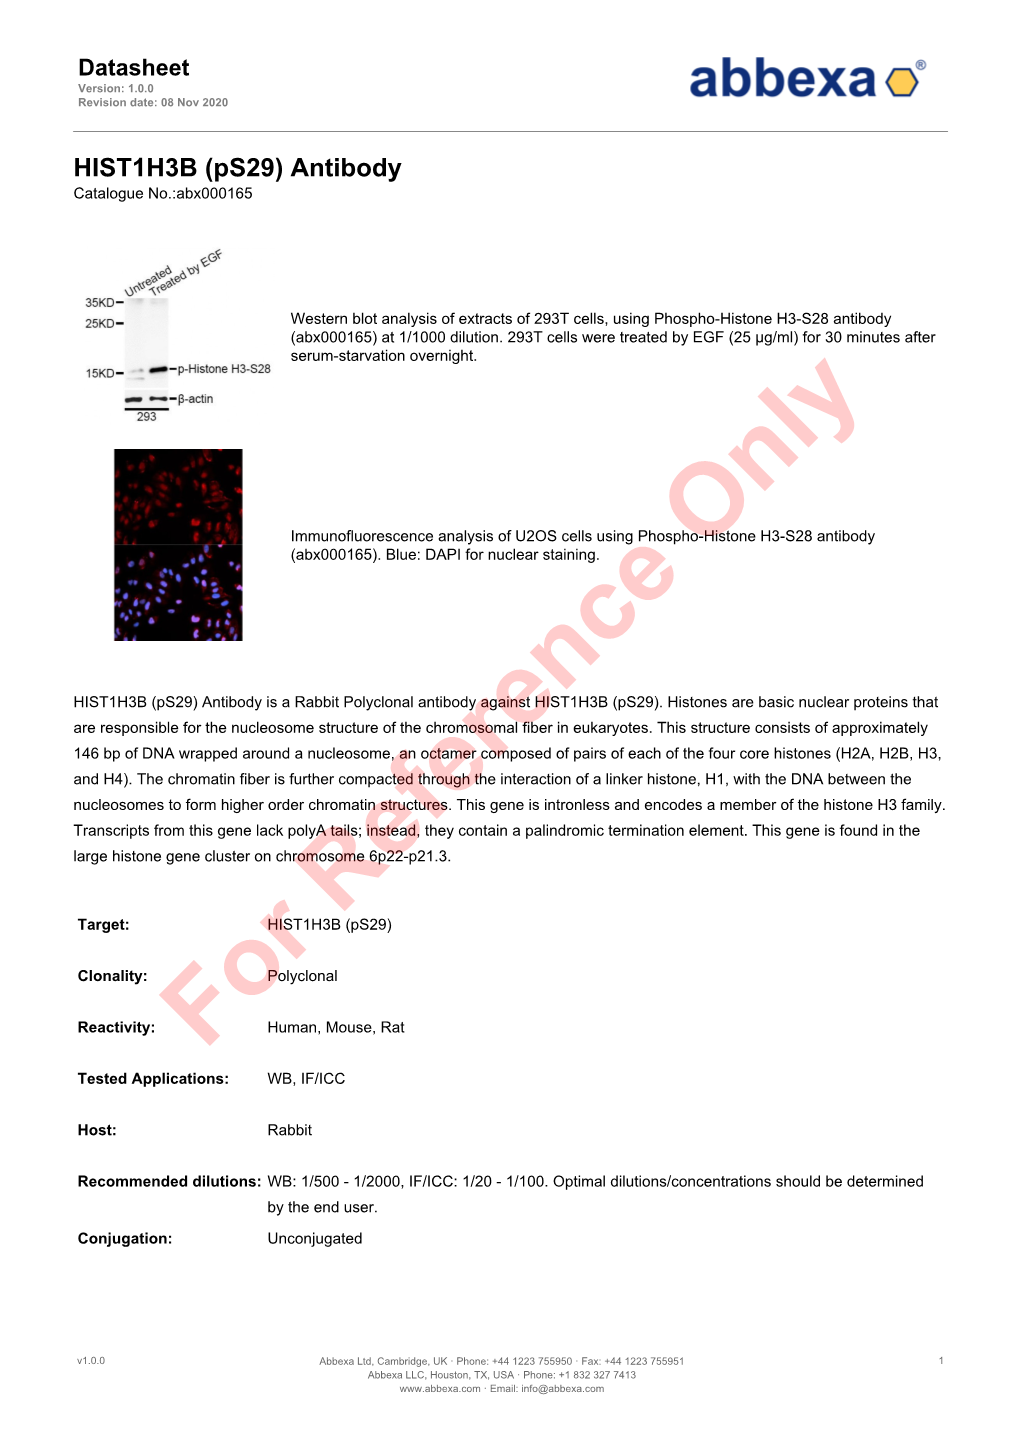 HIST1H3B (Ps29) Antibody Catalogue No.:Abx000165